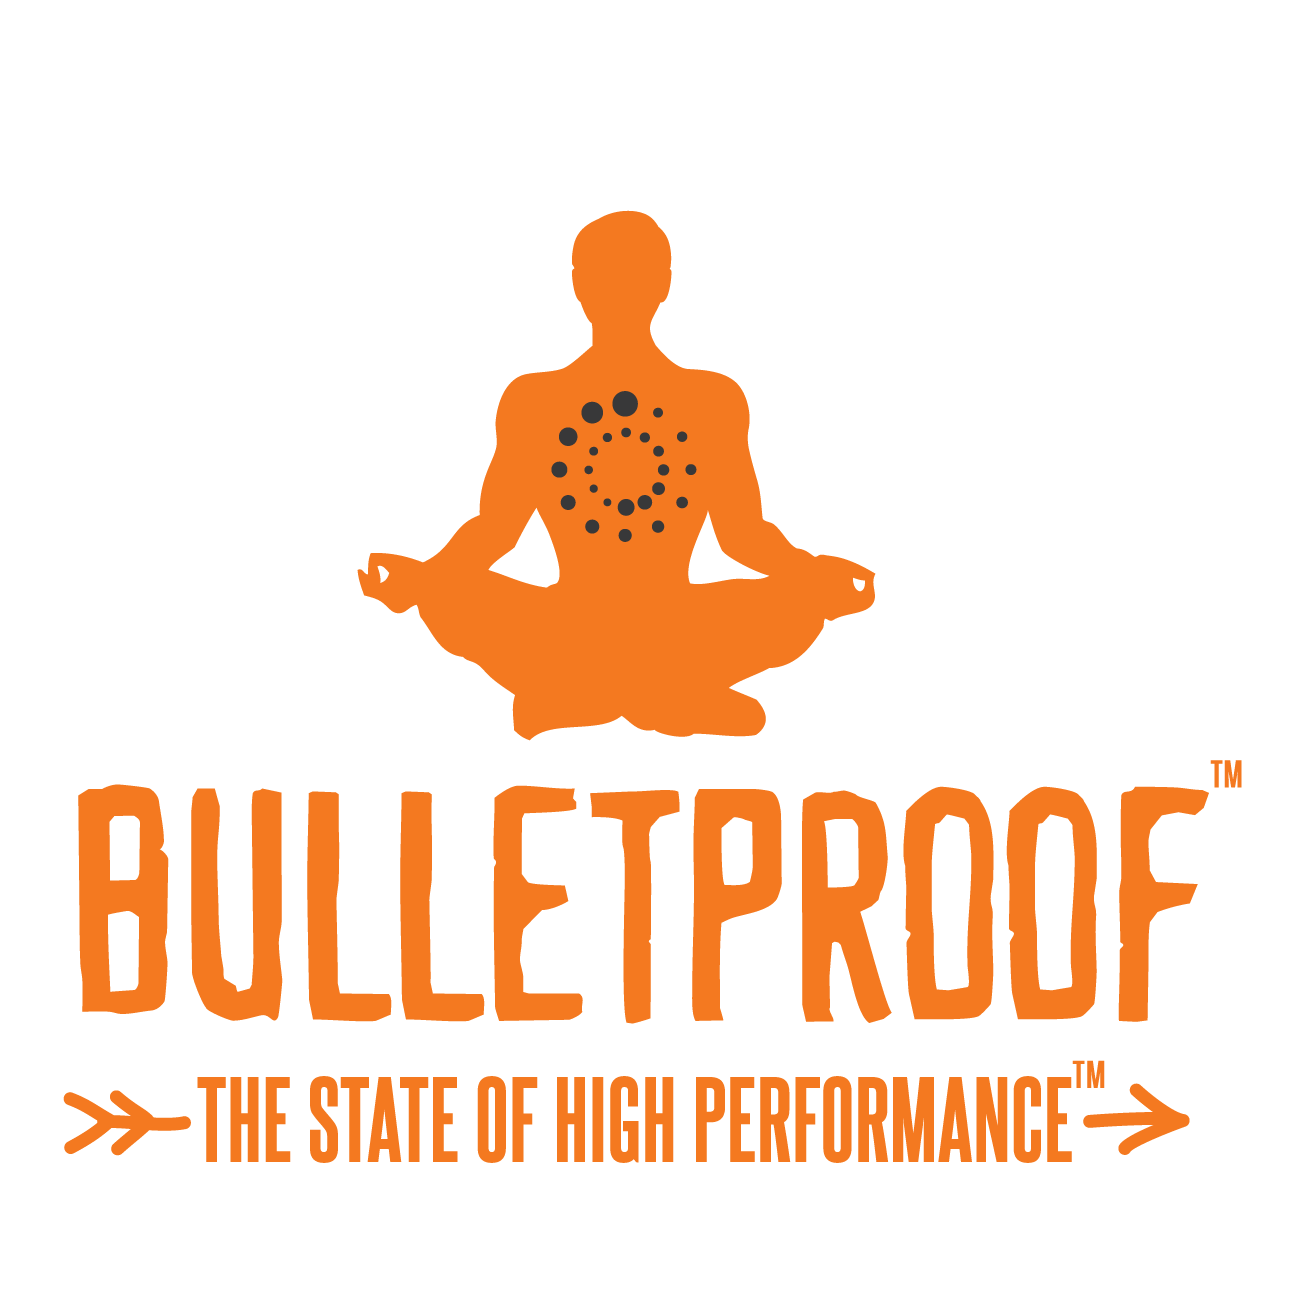 OSR 006: The Bulletproof Exuctive Dave Asprey talkes about Bulletproof